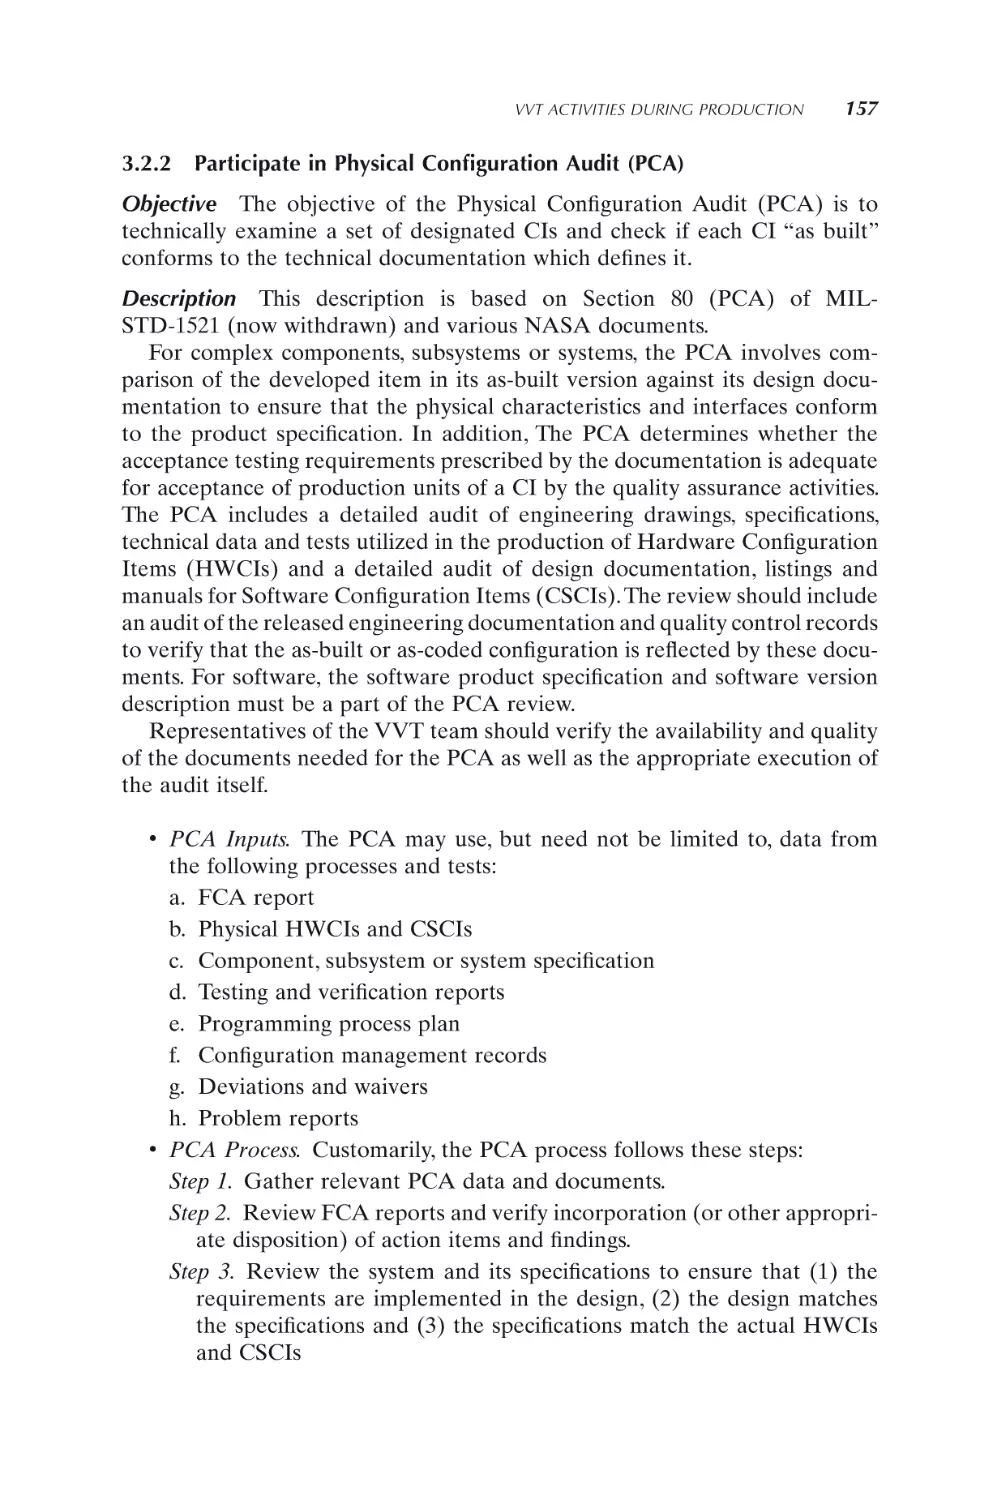 3.2.2 Participate in Physical Configuration Audit (PCA)